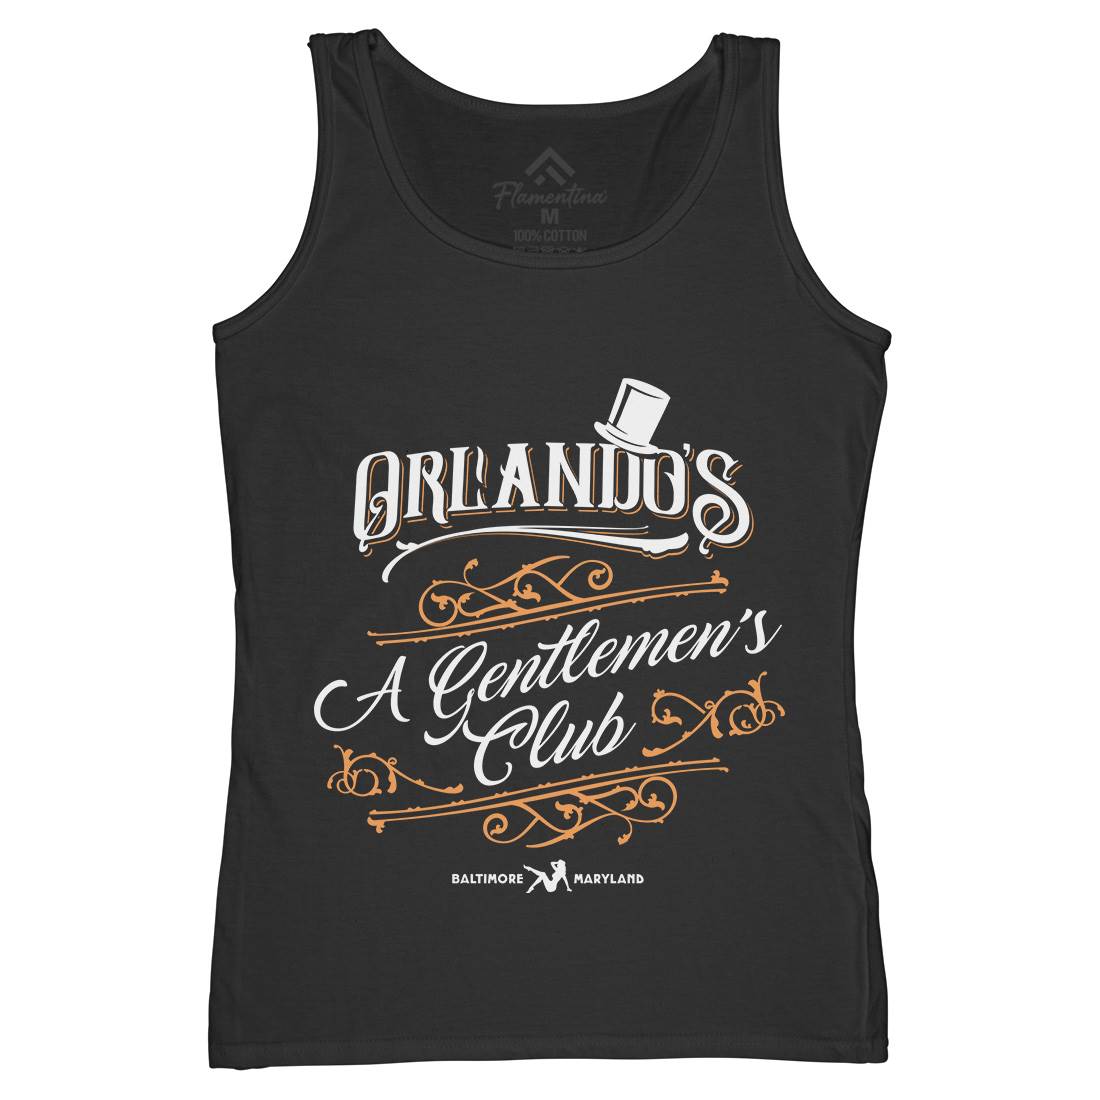 Orlandos Club Womens Organic Tank Top Vest Drinks D173